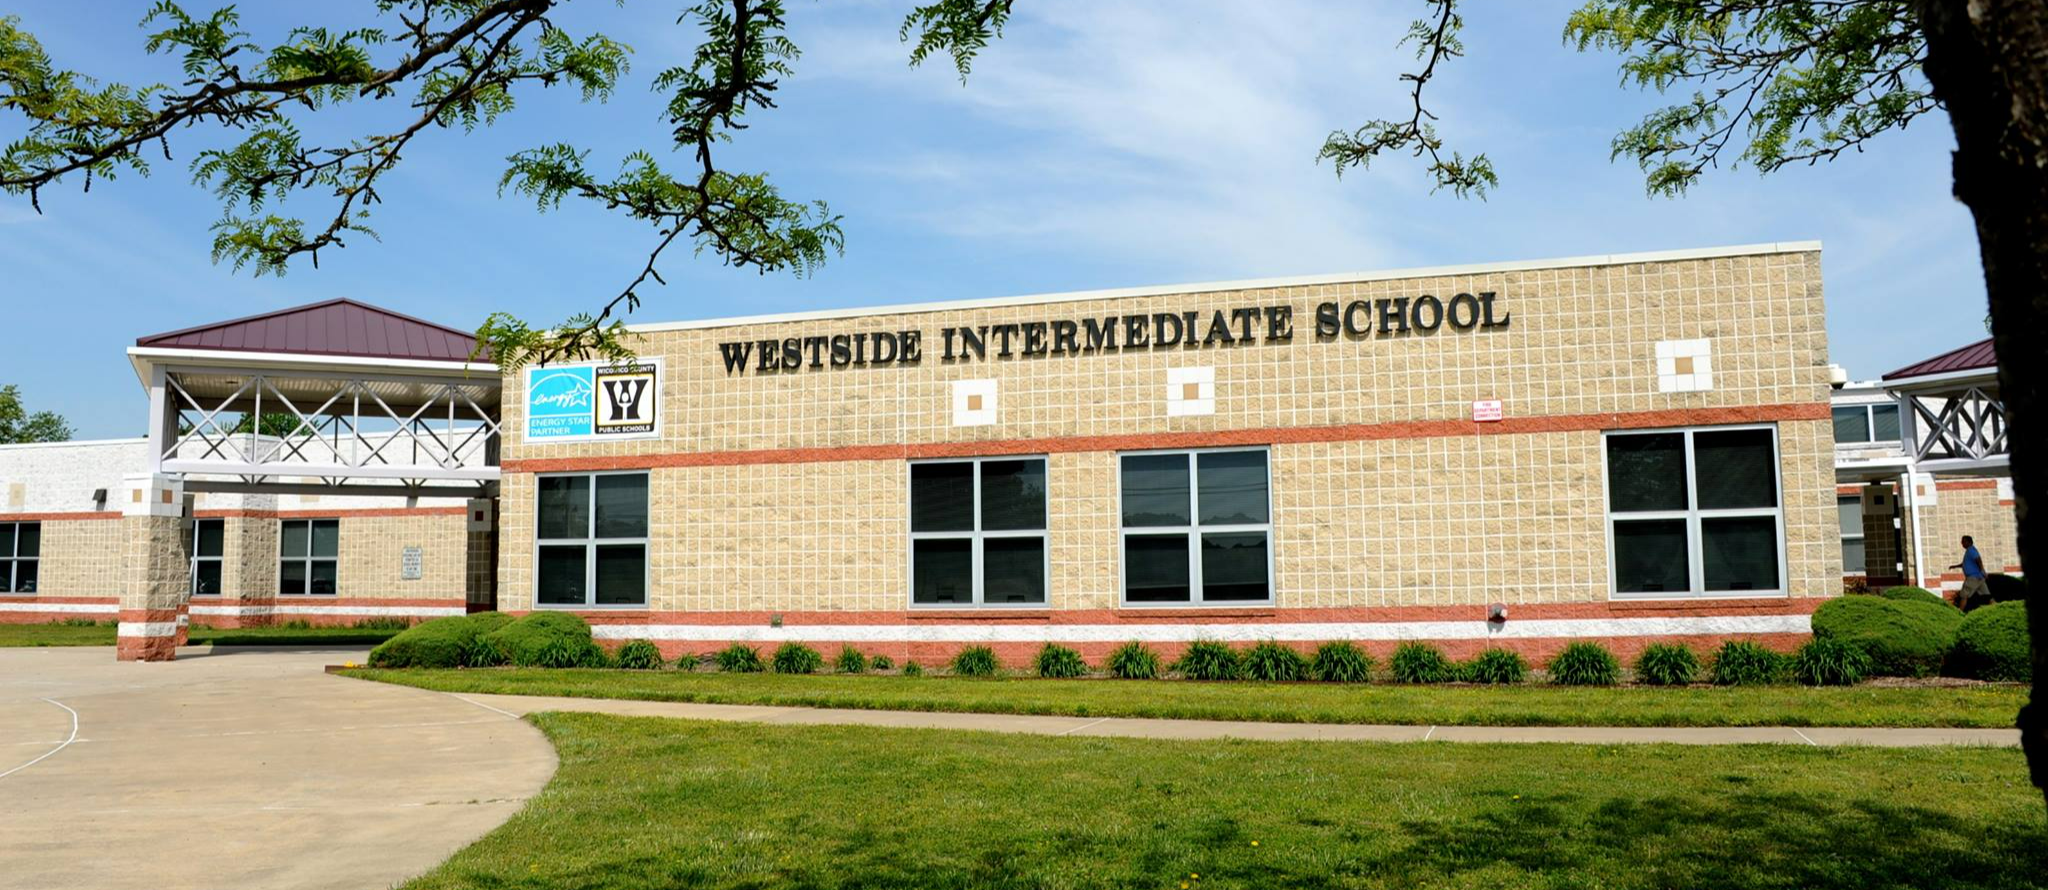 Westside Intermediate